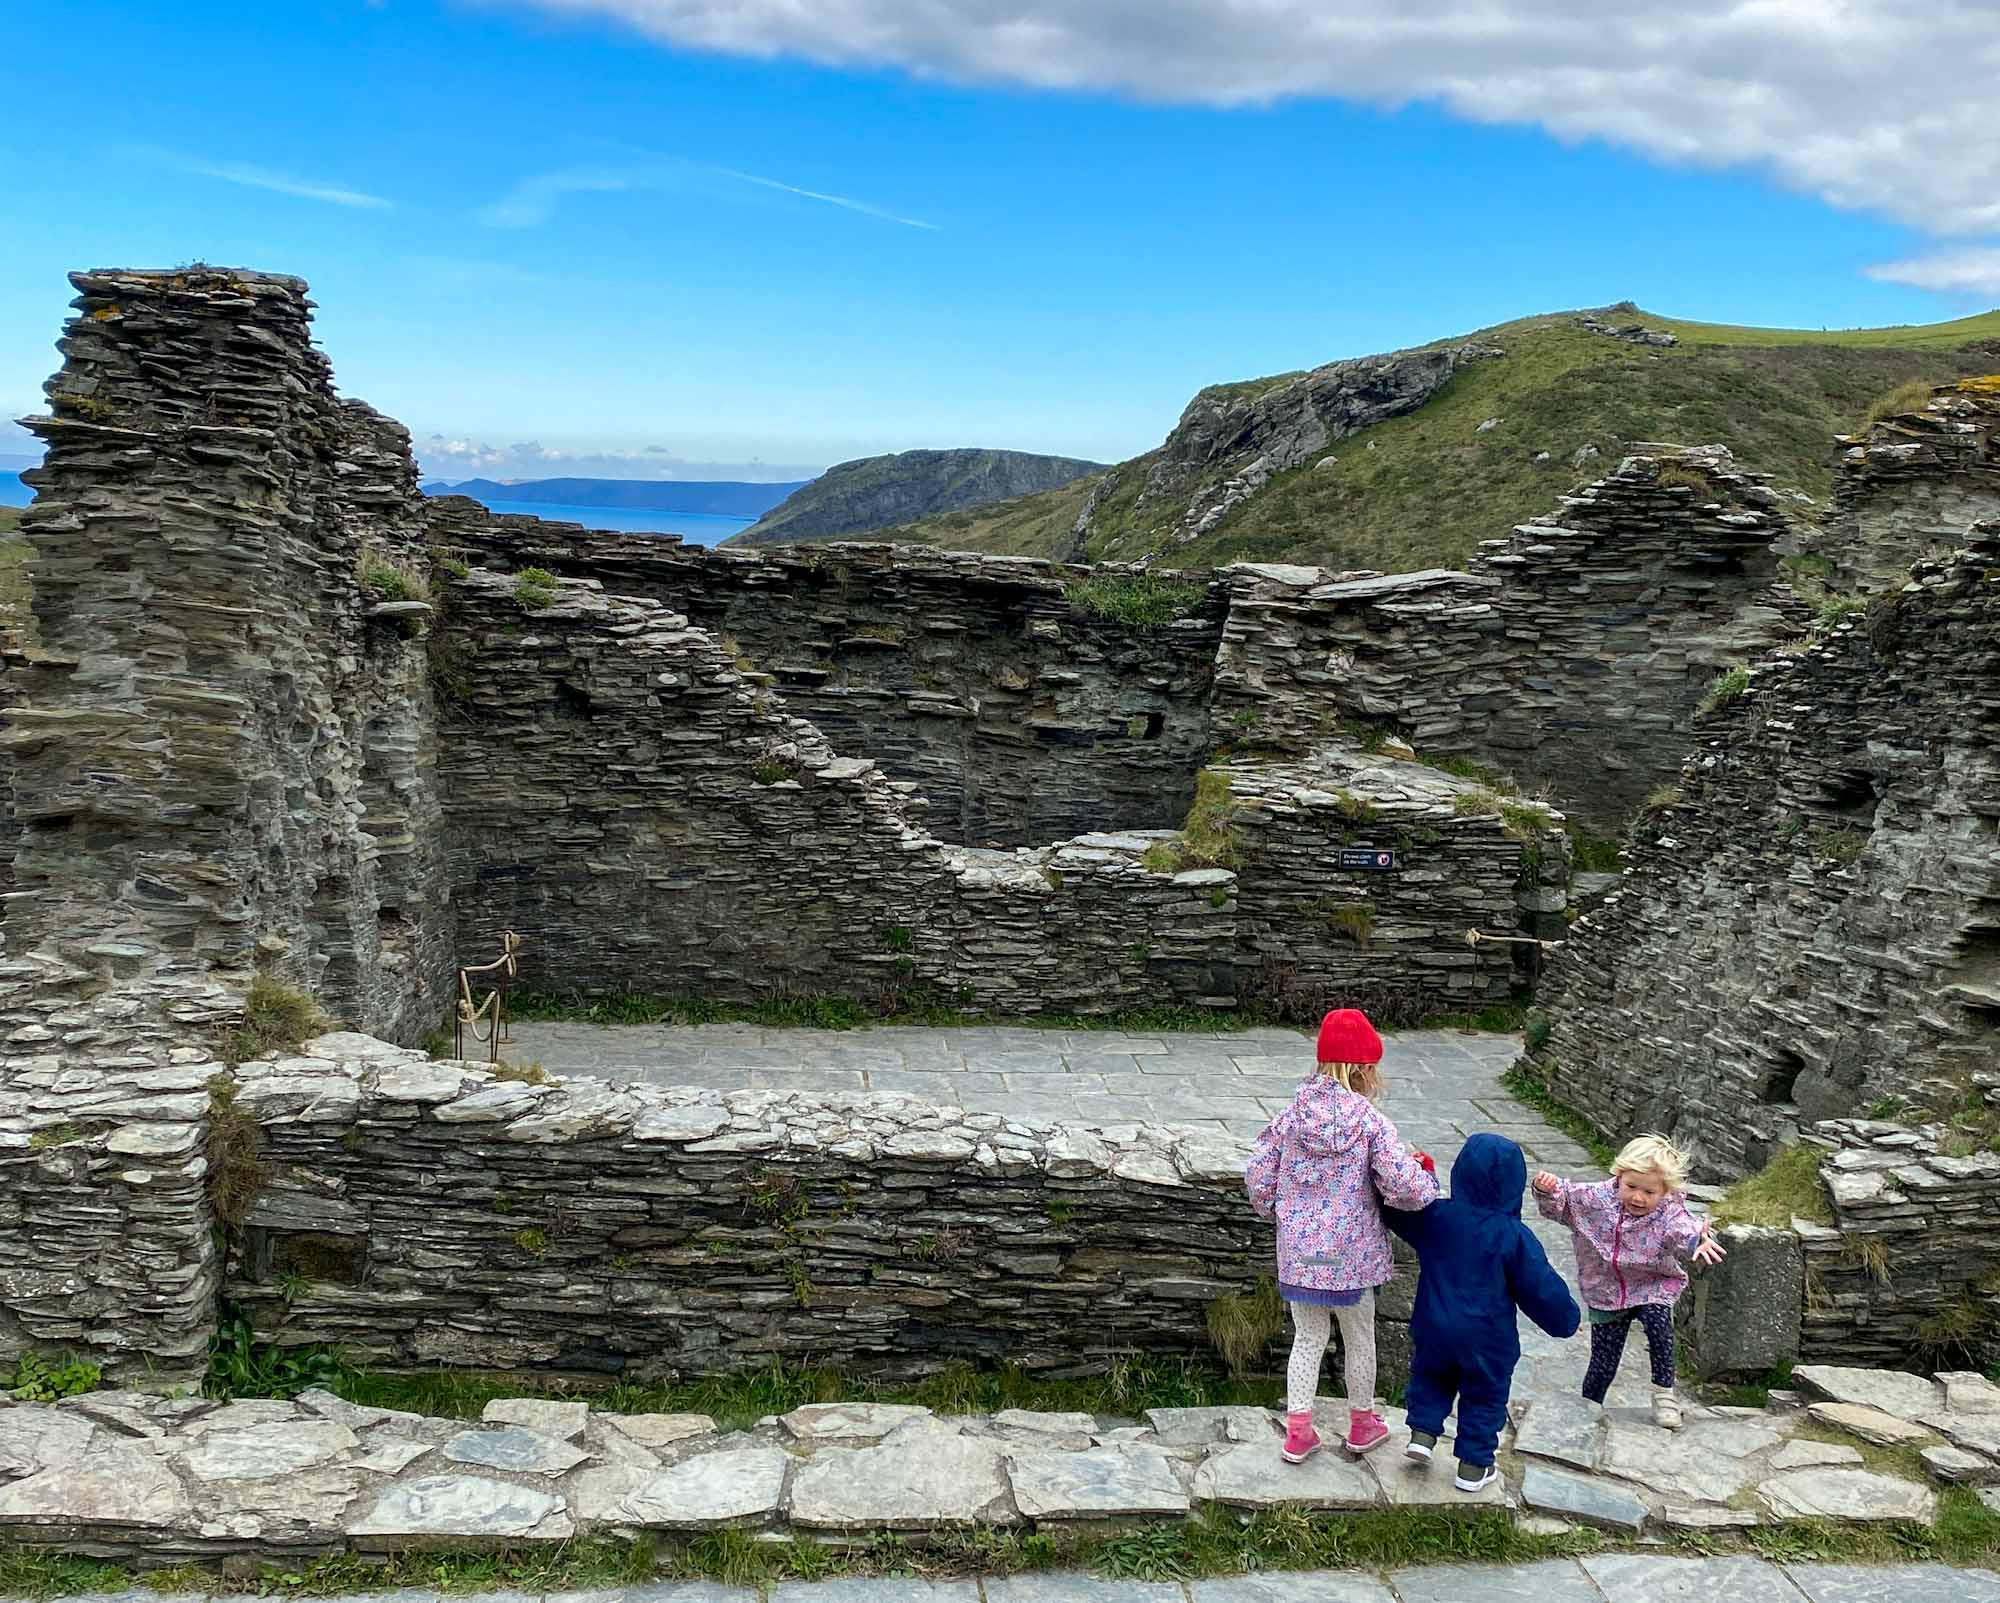 3 young children exploring shale stone castle ruins